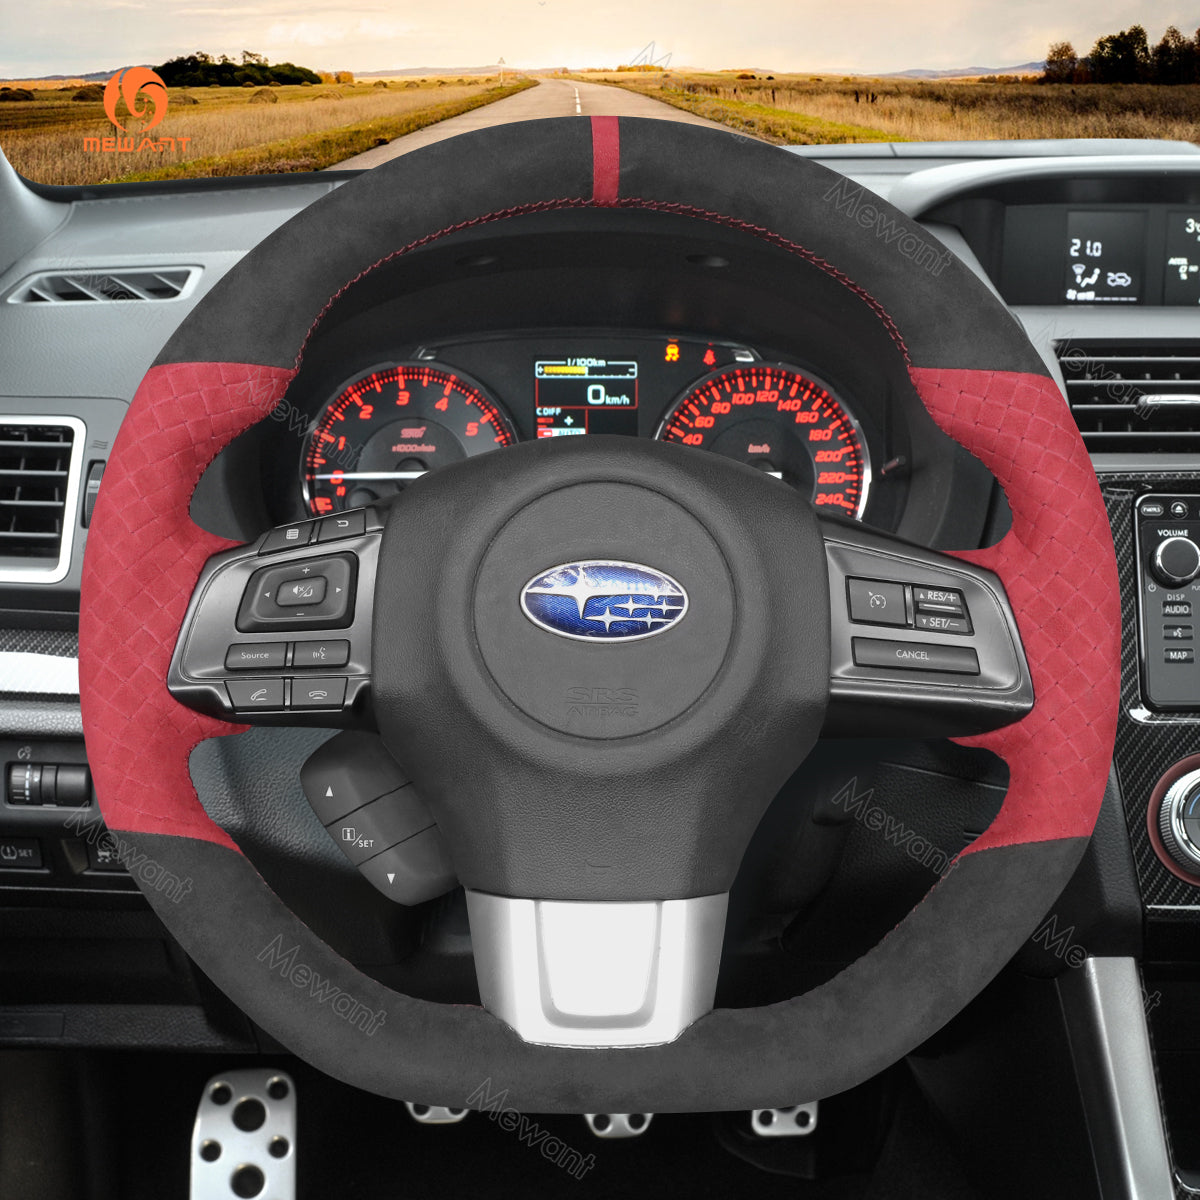 MEWANT Hand Stitch Carbon Fiber Black Leather Suede Car Steering Wheel Cover for Subaru WRX (STI) Levorg 2015-2019